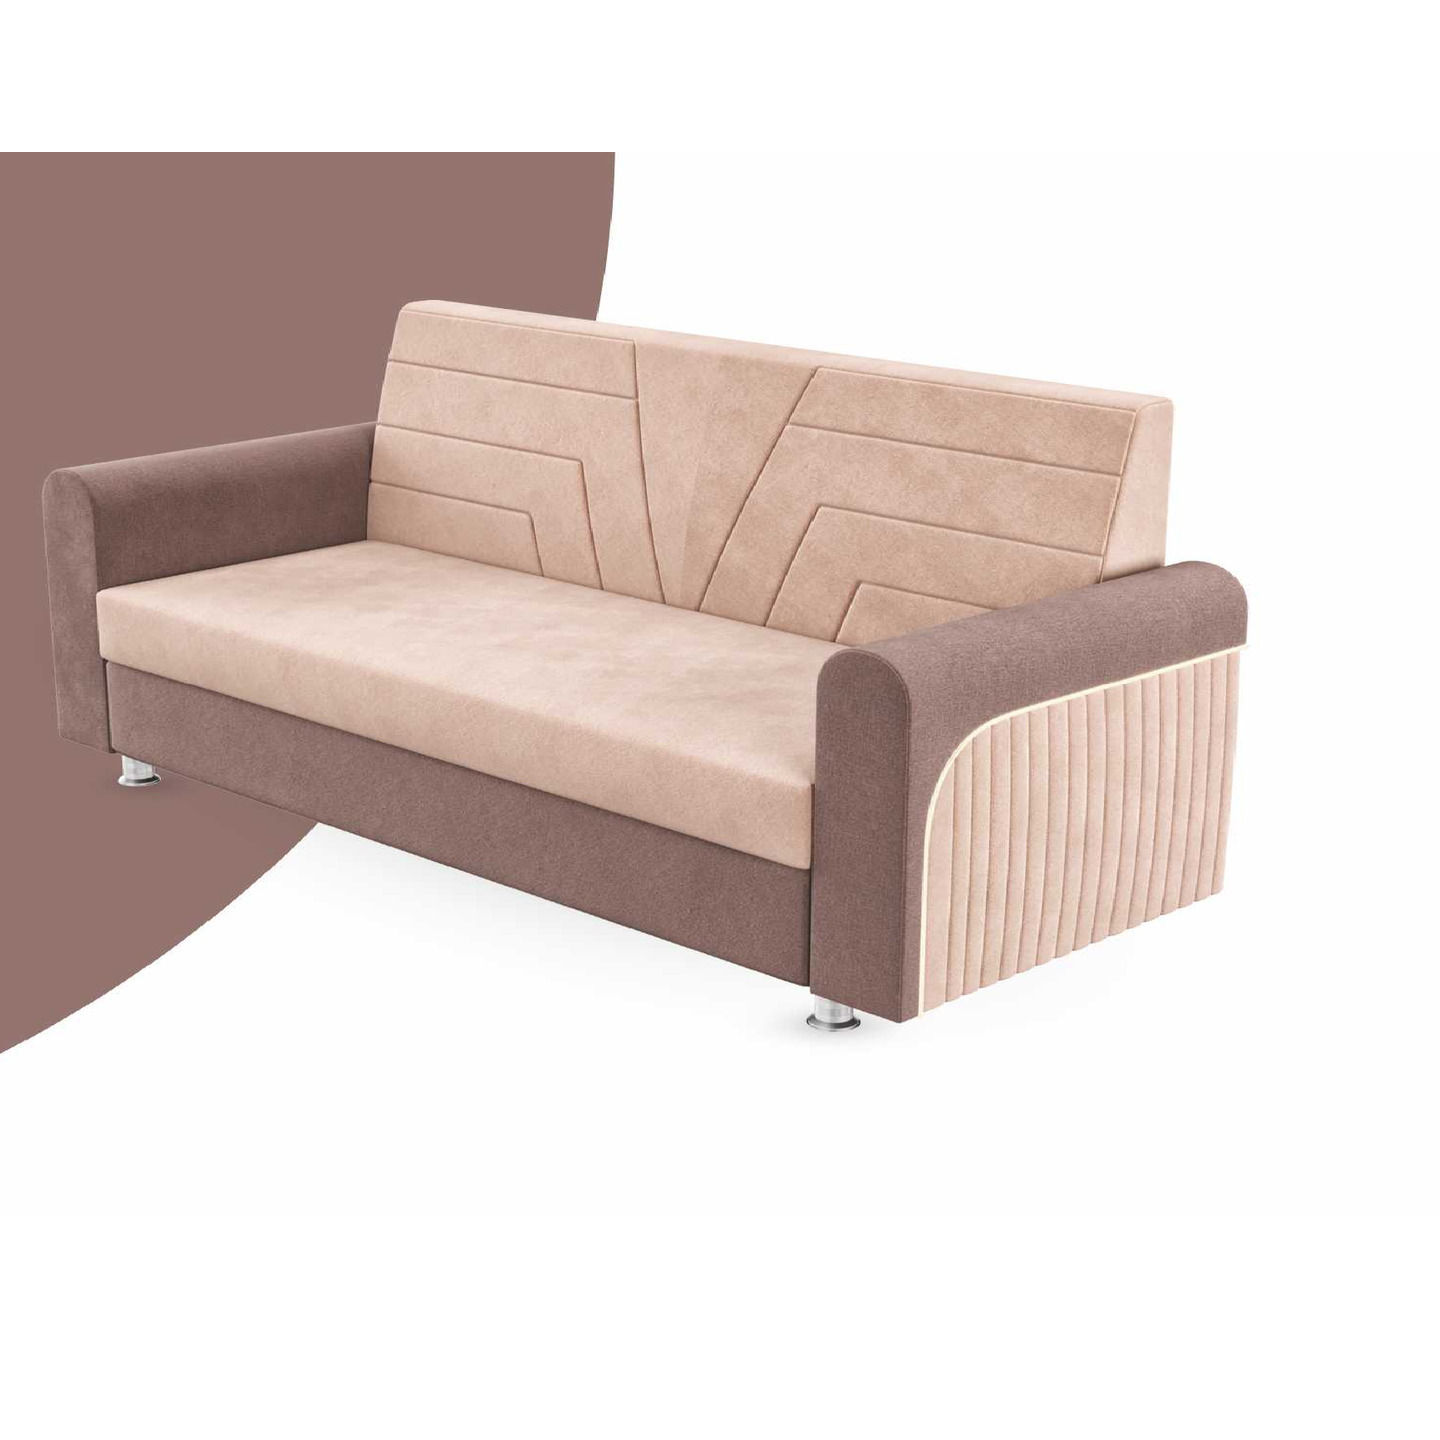 RLF Sofa Set 3+2 DD-573 In Brown Colour